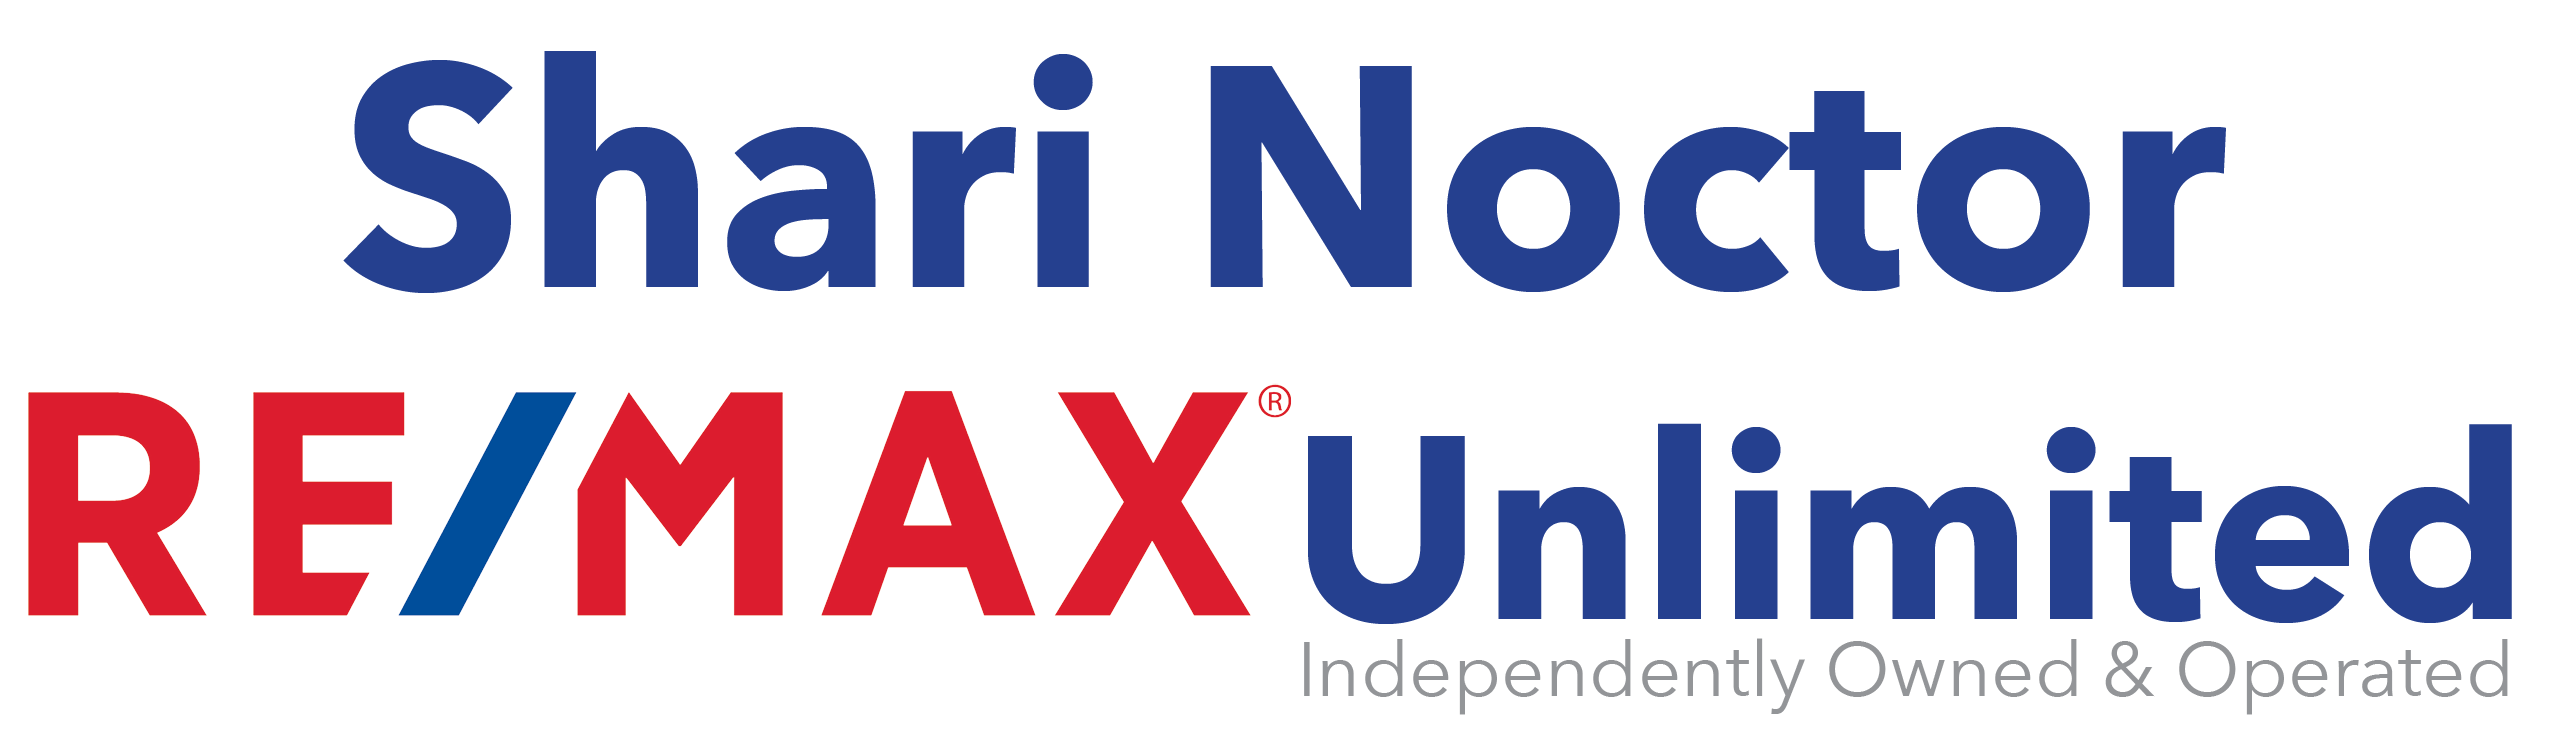 Shari Noctor Re/Max Unlimited Logo